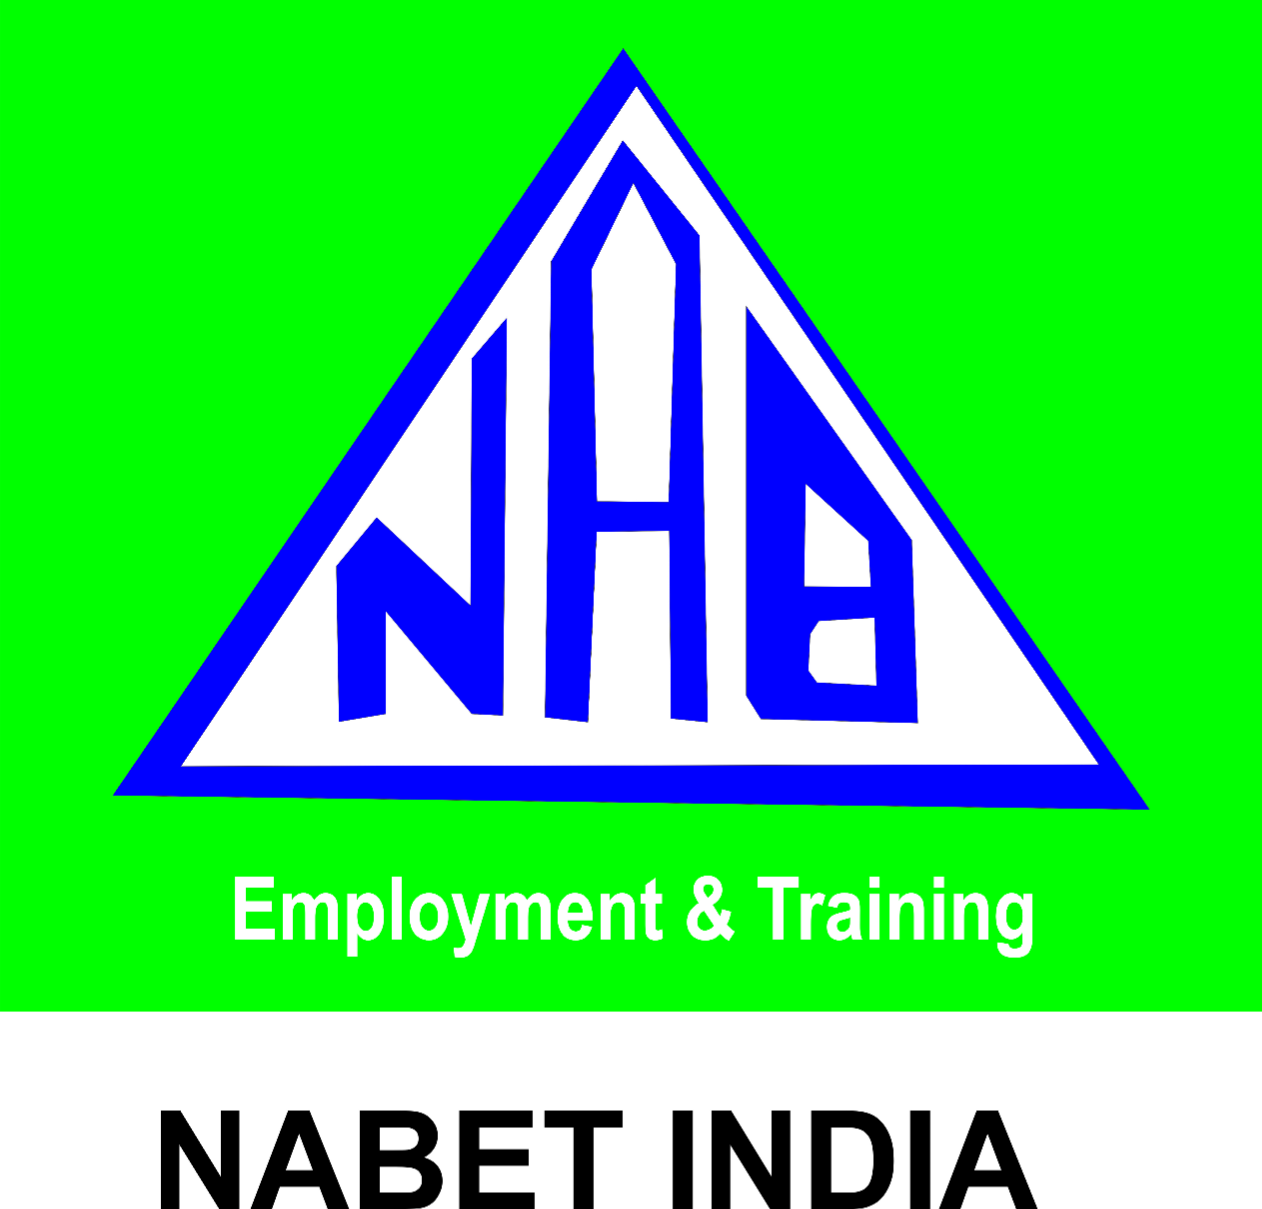 National Association for the Blind (Employment & Training), Manesar logo